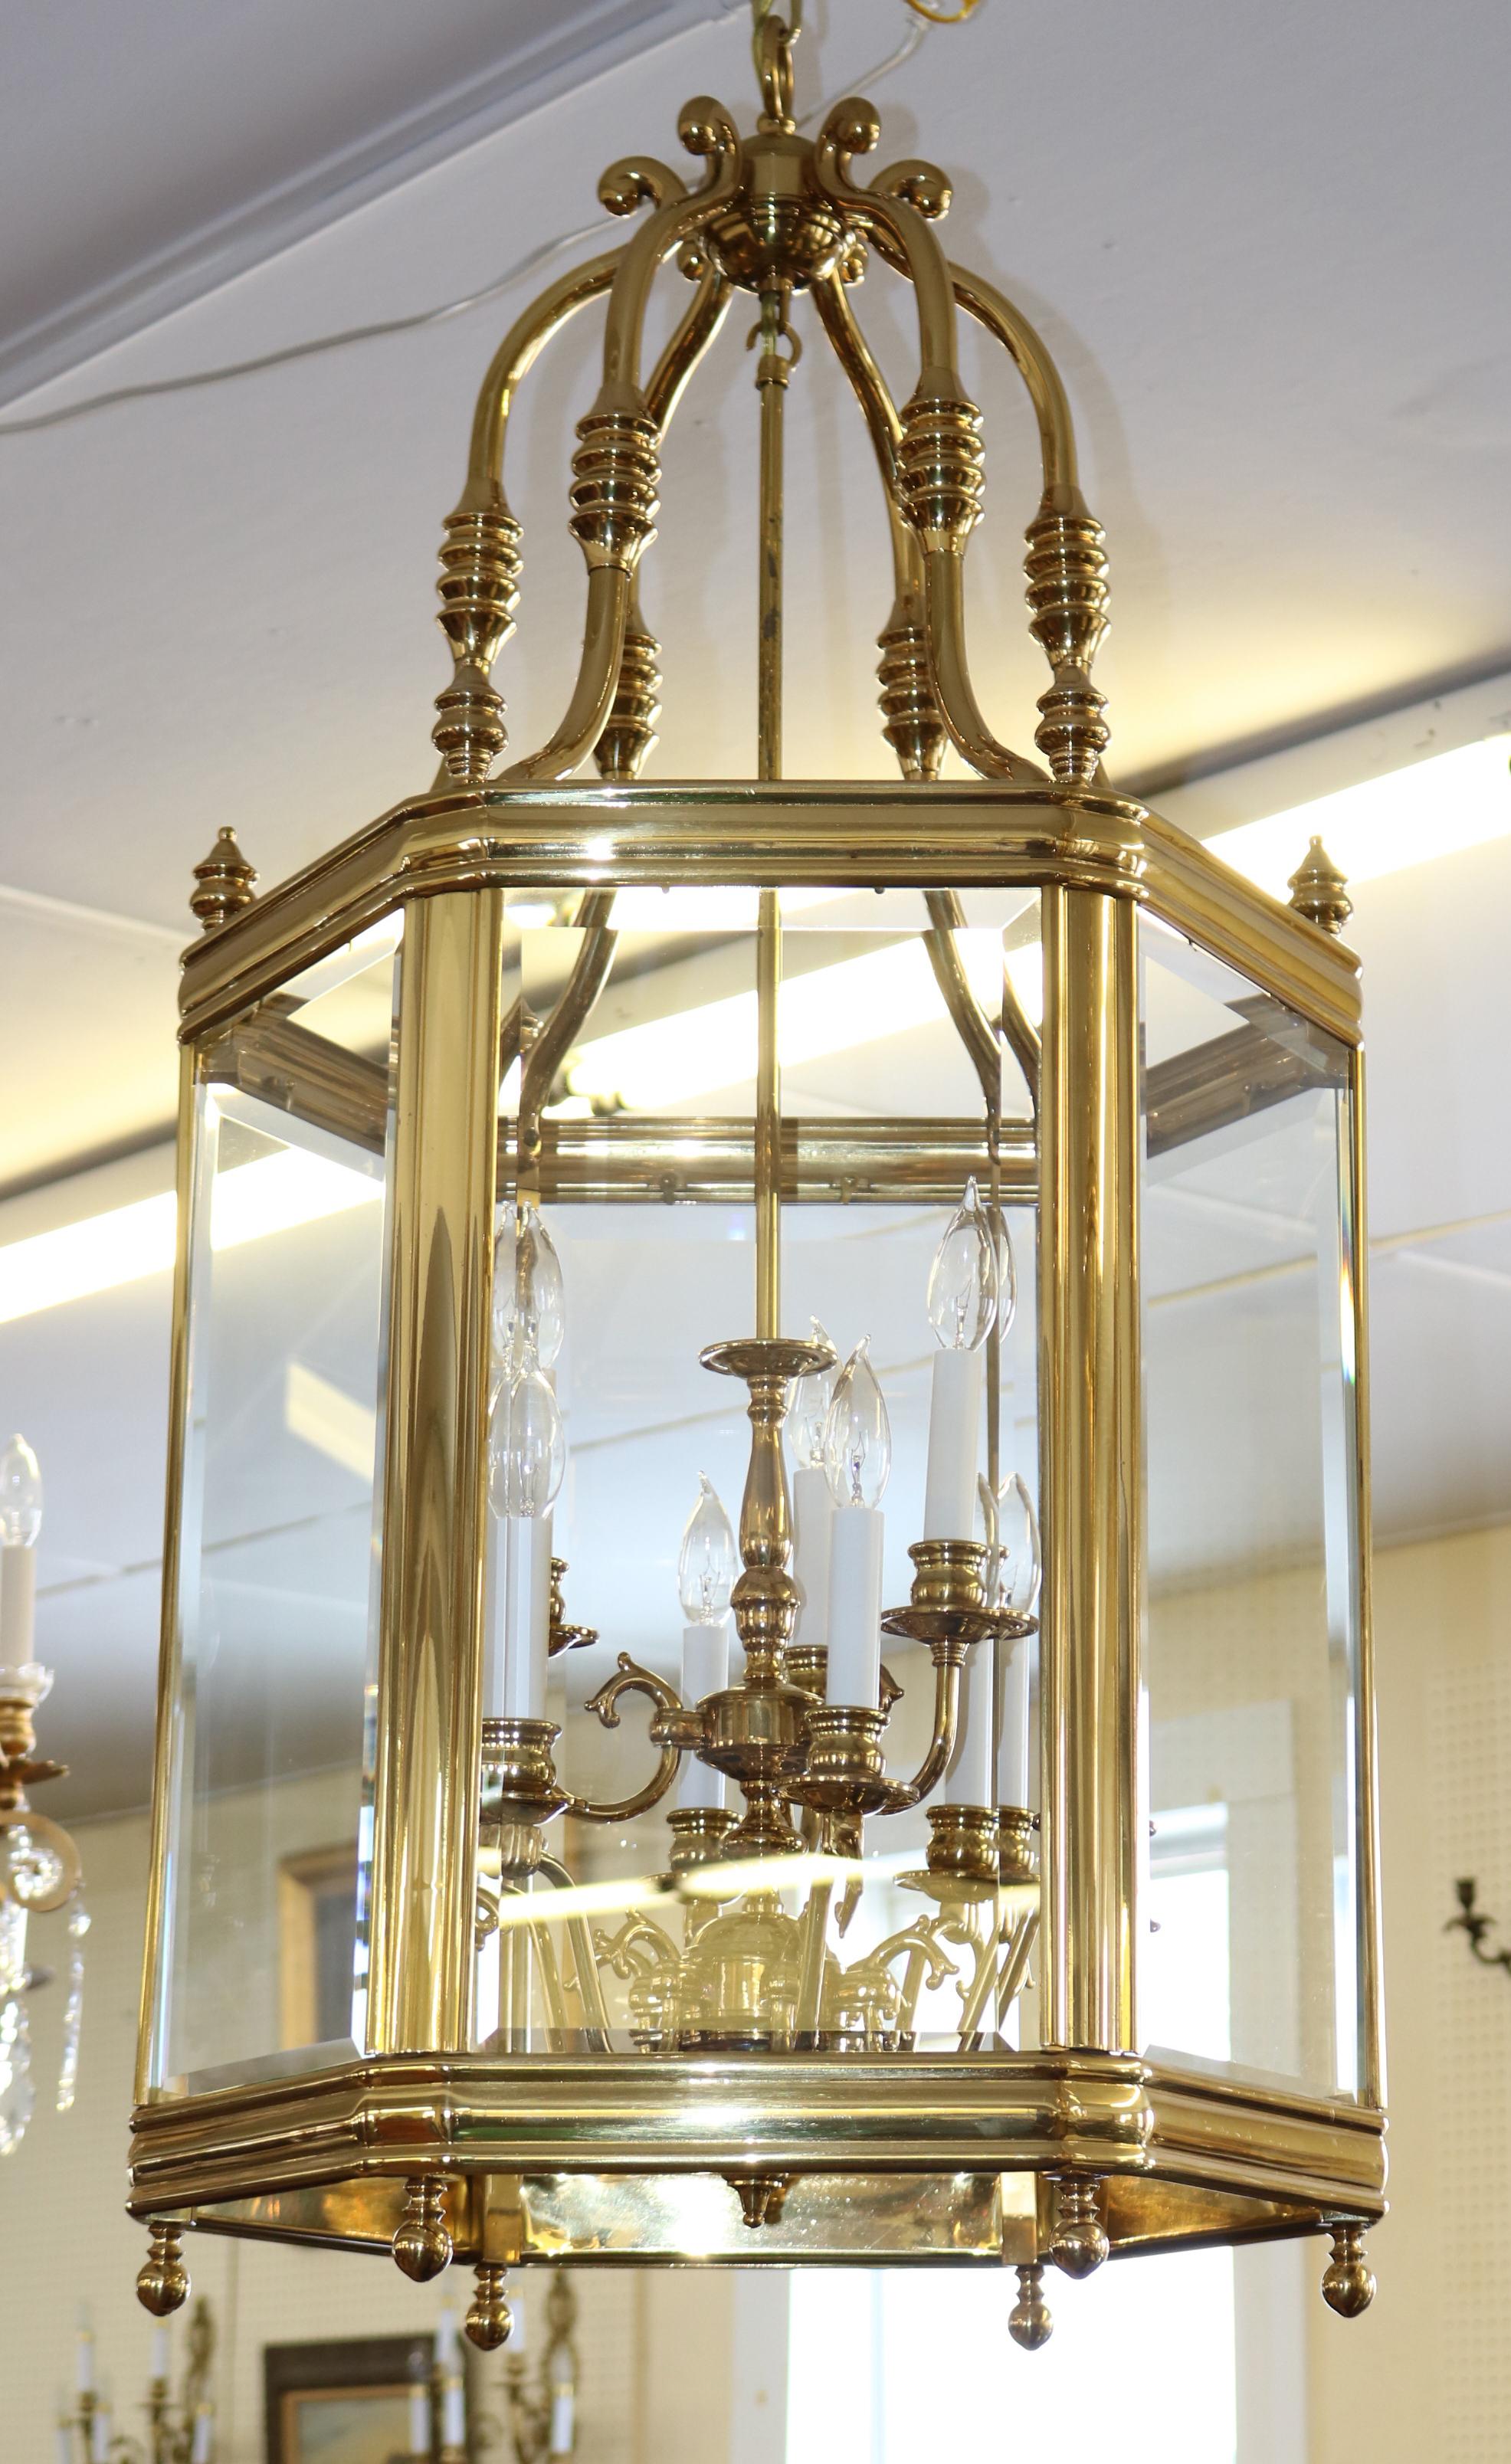 Gorgeous Large Brass Hexagon Shape Lantern Chandelier 9 Light Beveled Glass

Dimensions : 44